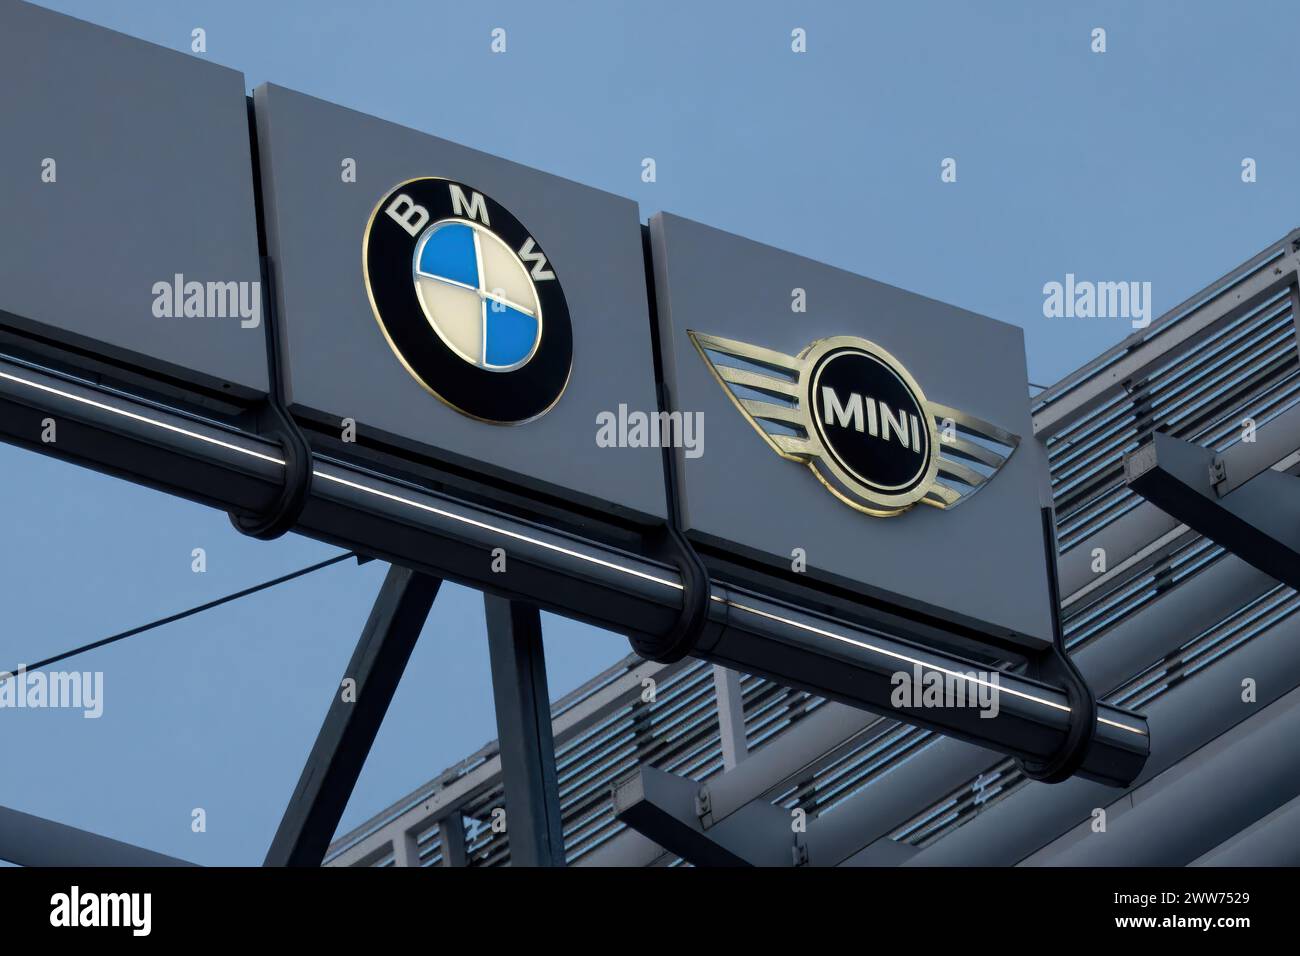 BMW and MINI logos on car dealership building - BMW is a German multinational car manufacturer. Stock Photo